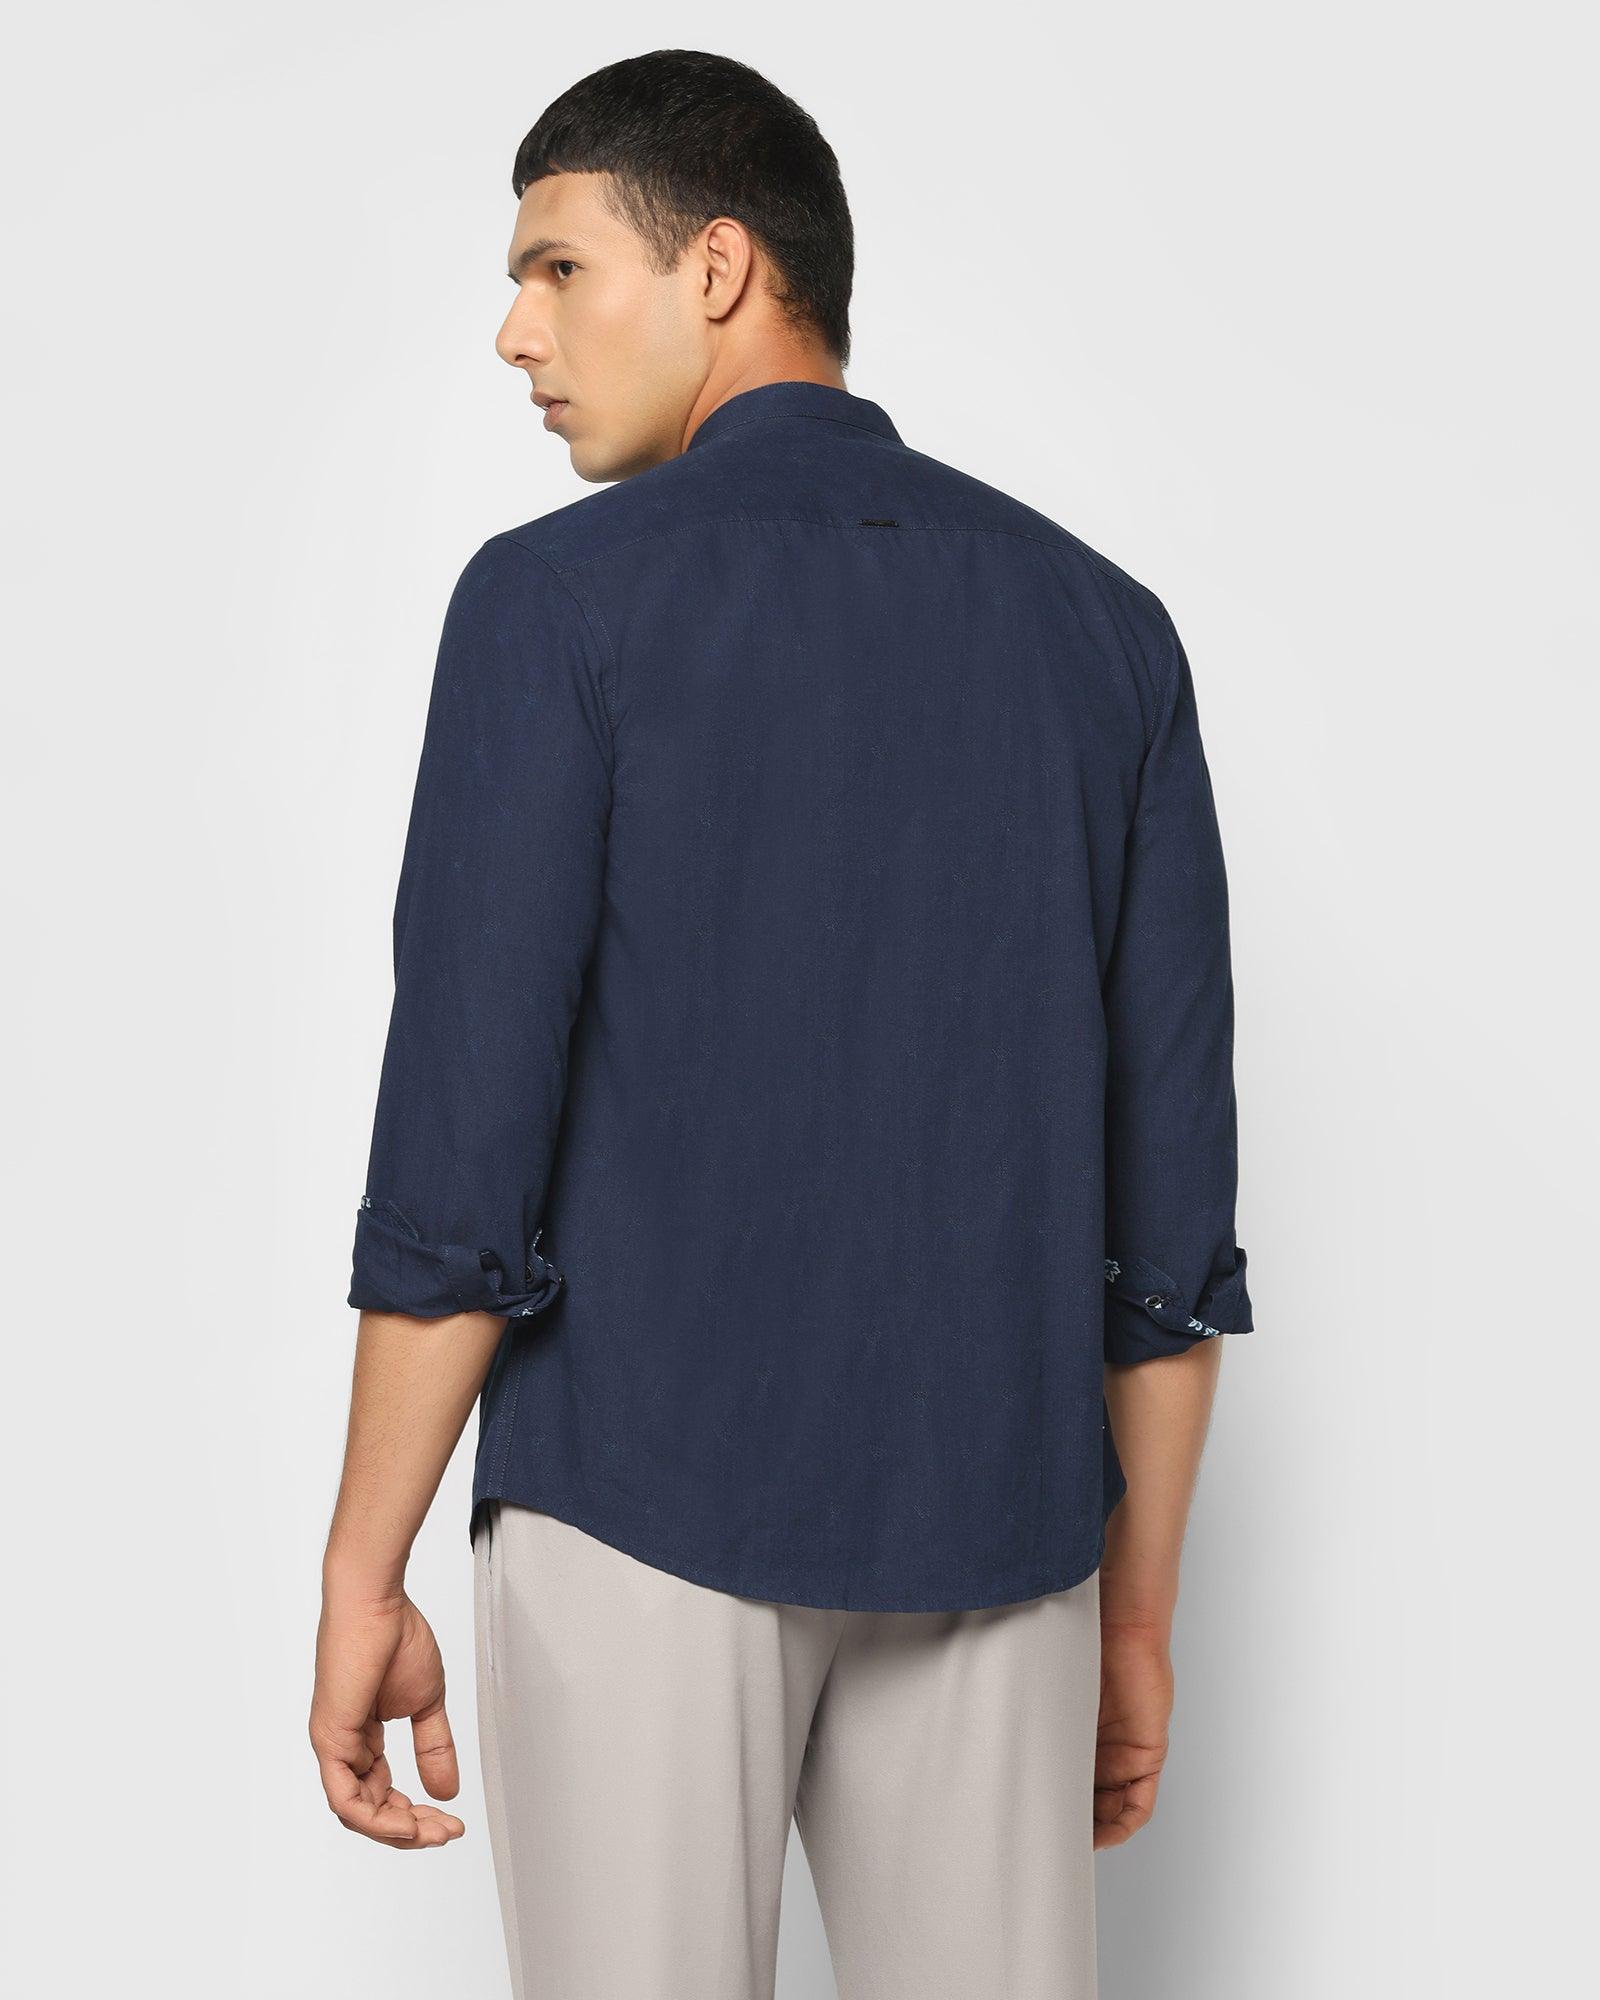 Casual Indigo Textured Shirt - Pace